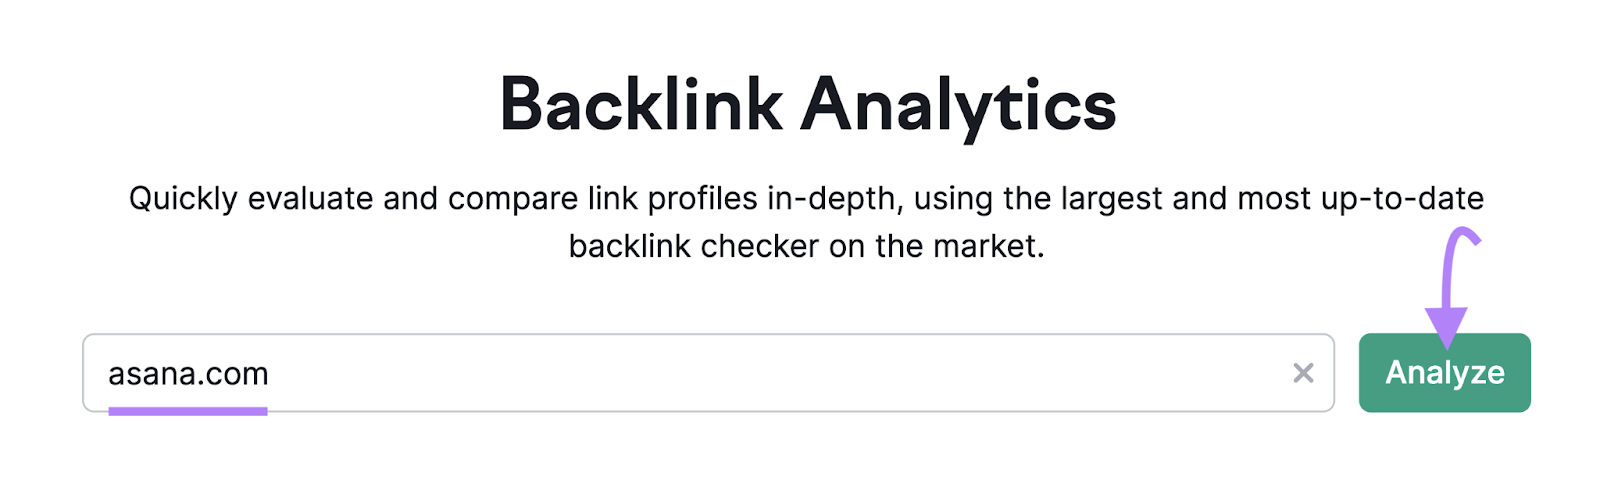 "asana.com" entered into the Backlink Analytics search bar